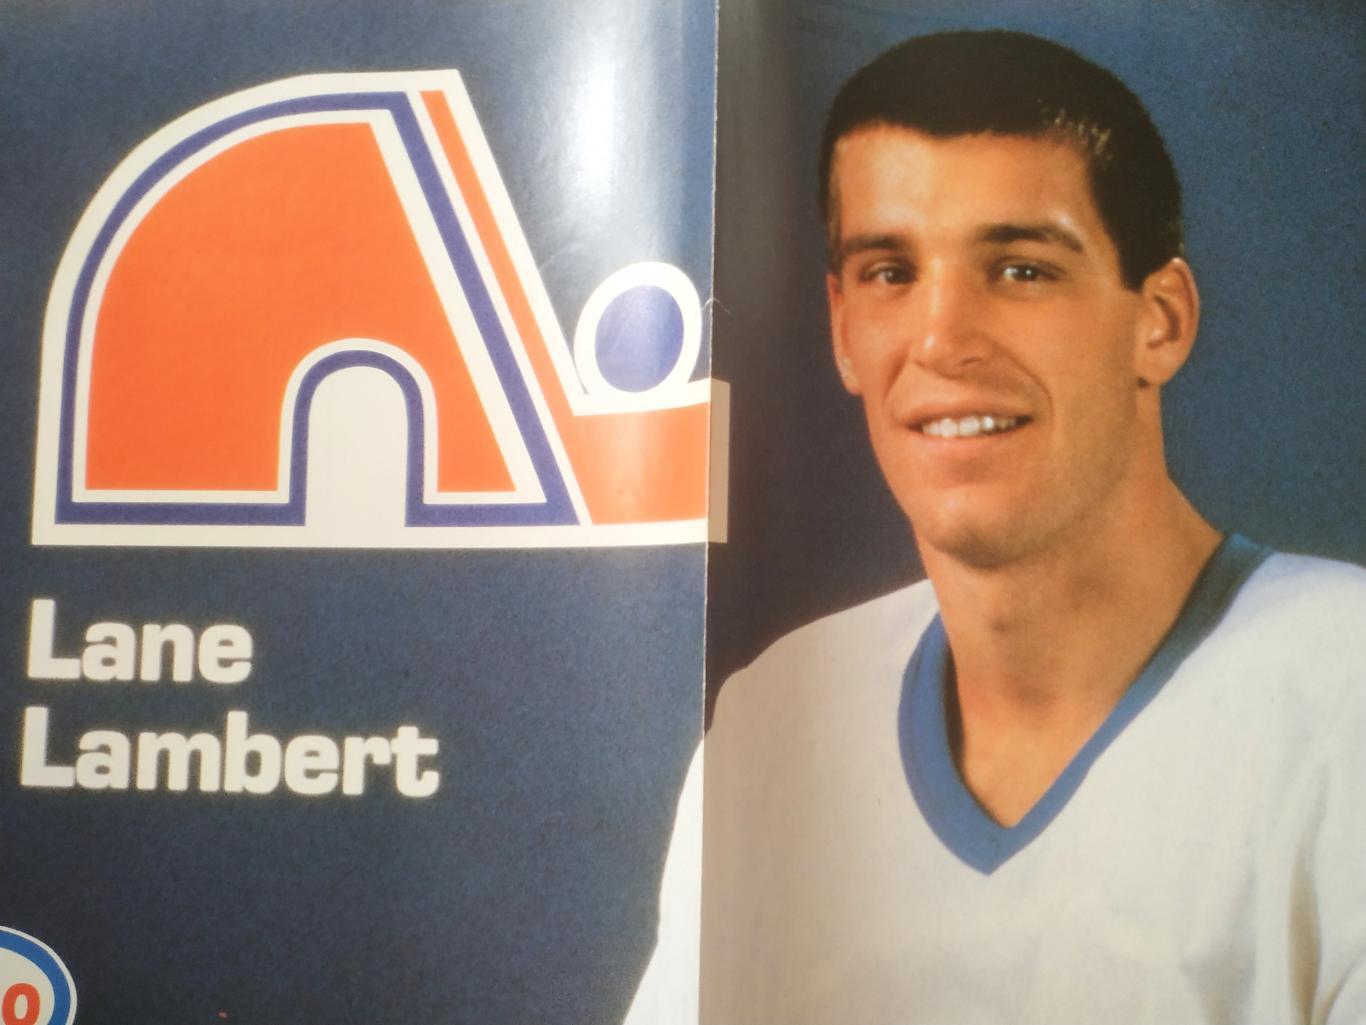 ХОККЕЙ ПОСТЕР НХЛ КВЕБЕК ЛЭЙН ЛАМБЕРТ POSTER NHL QUEBEC LANE LAMBERT #7 A3